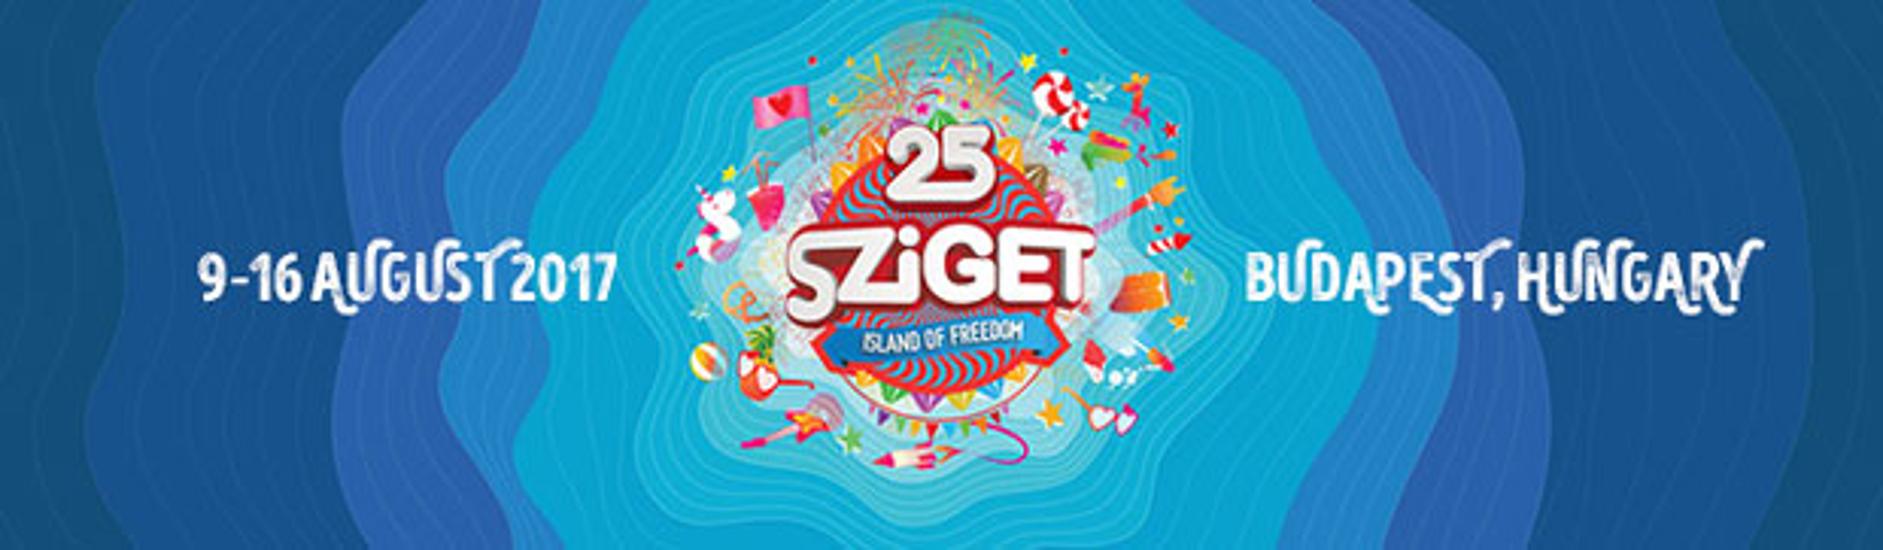 Update: Budapest Sziget Festival Program Shaping Up